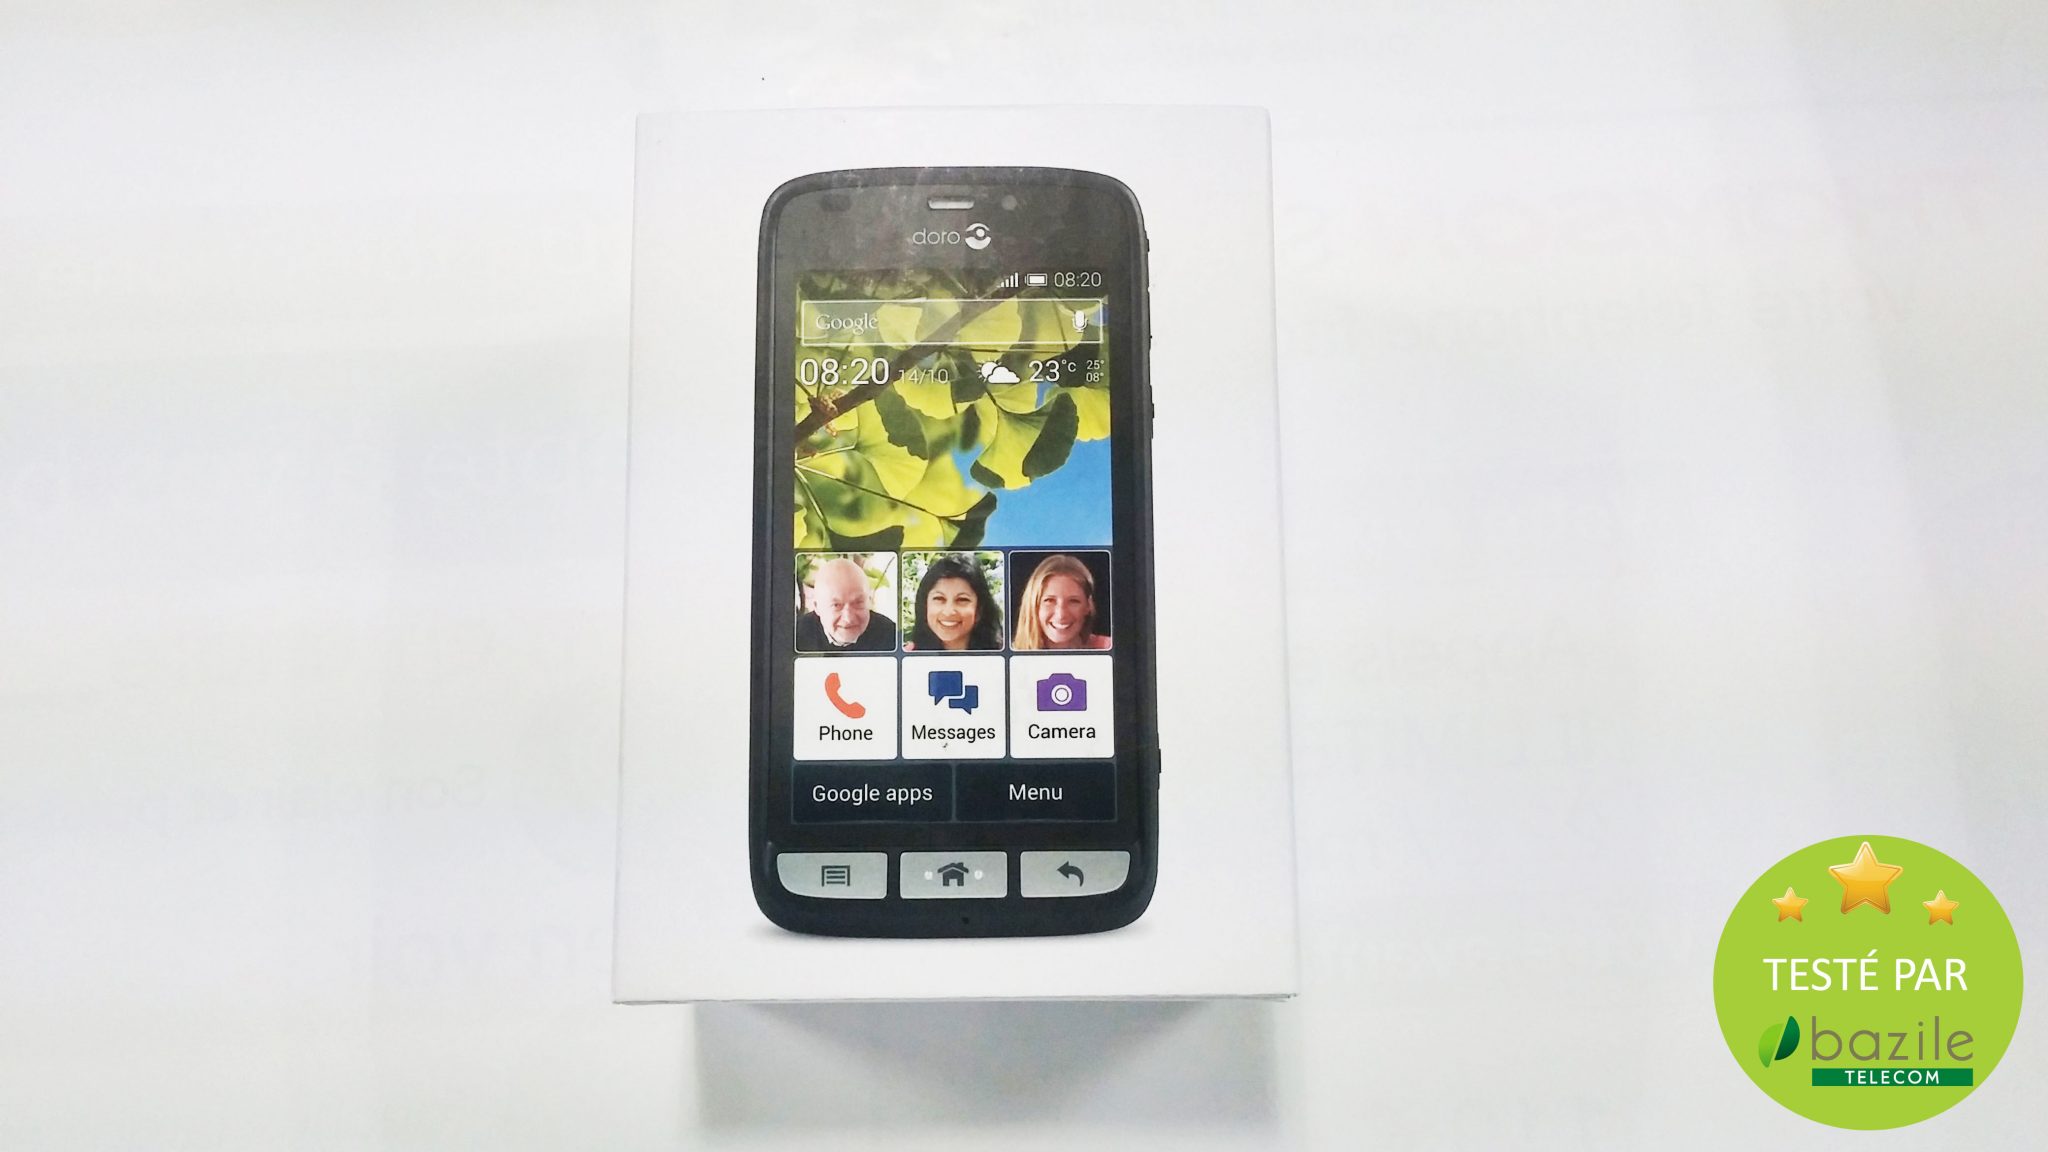 Smartphone senior Doro 8080 Noir avec extension mémoire carte SD